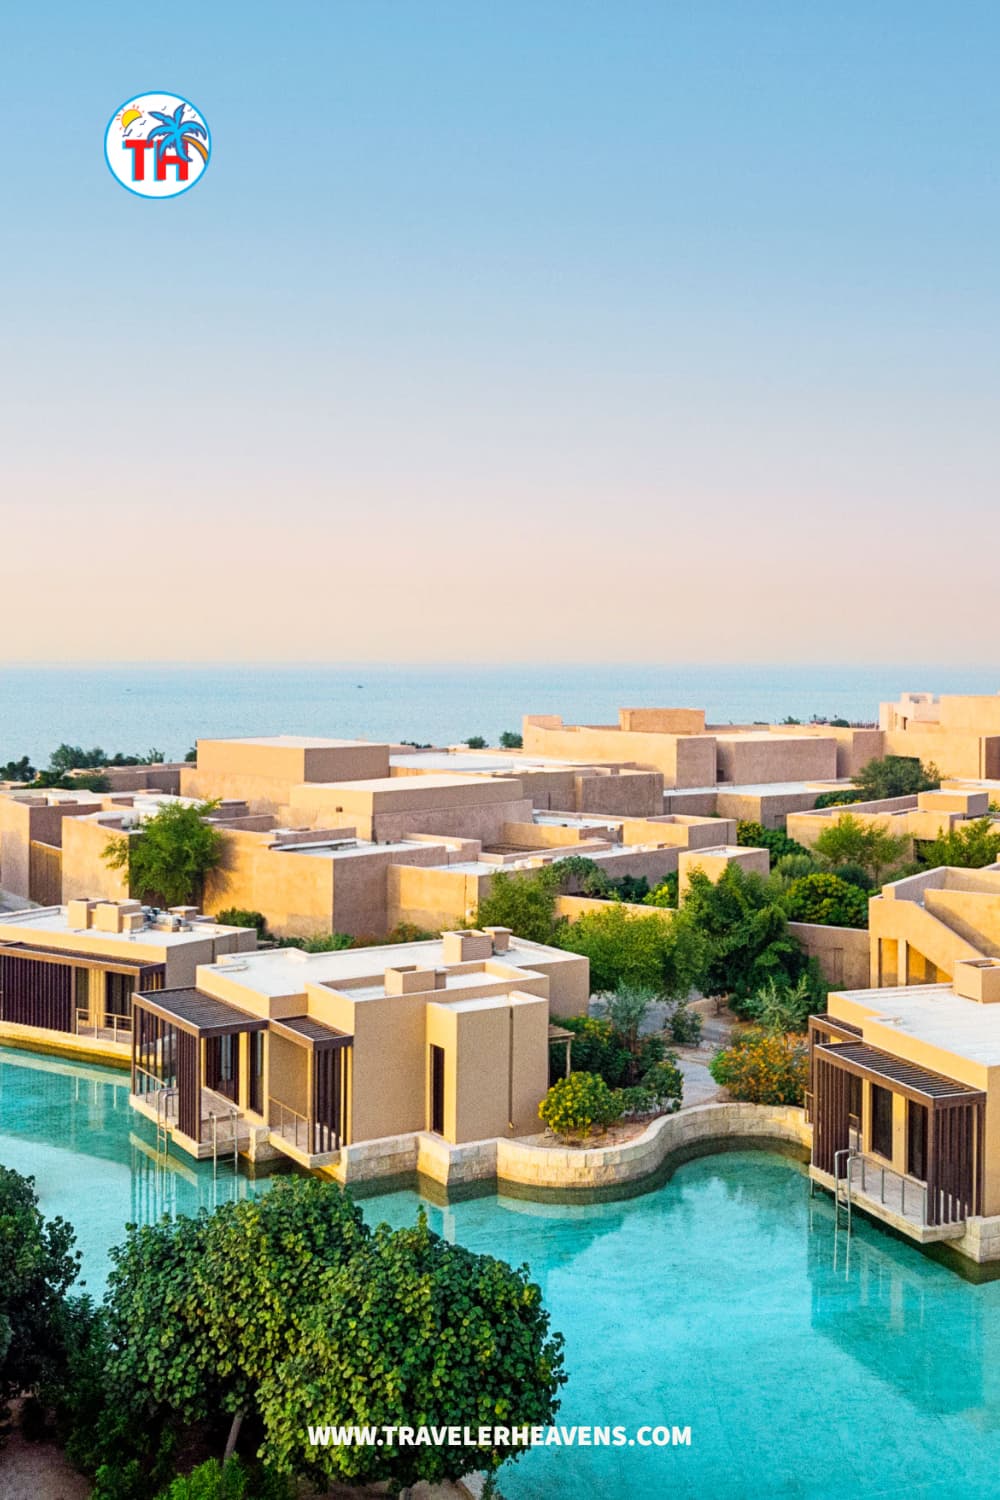 Beautiful Hotels, Qatar, Qatar Hotels, Qatar Travel Guide, Top 10 best Hotels to visit in Qatar, Travel to Qatar, Visit Qatar